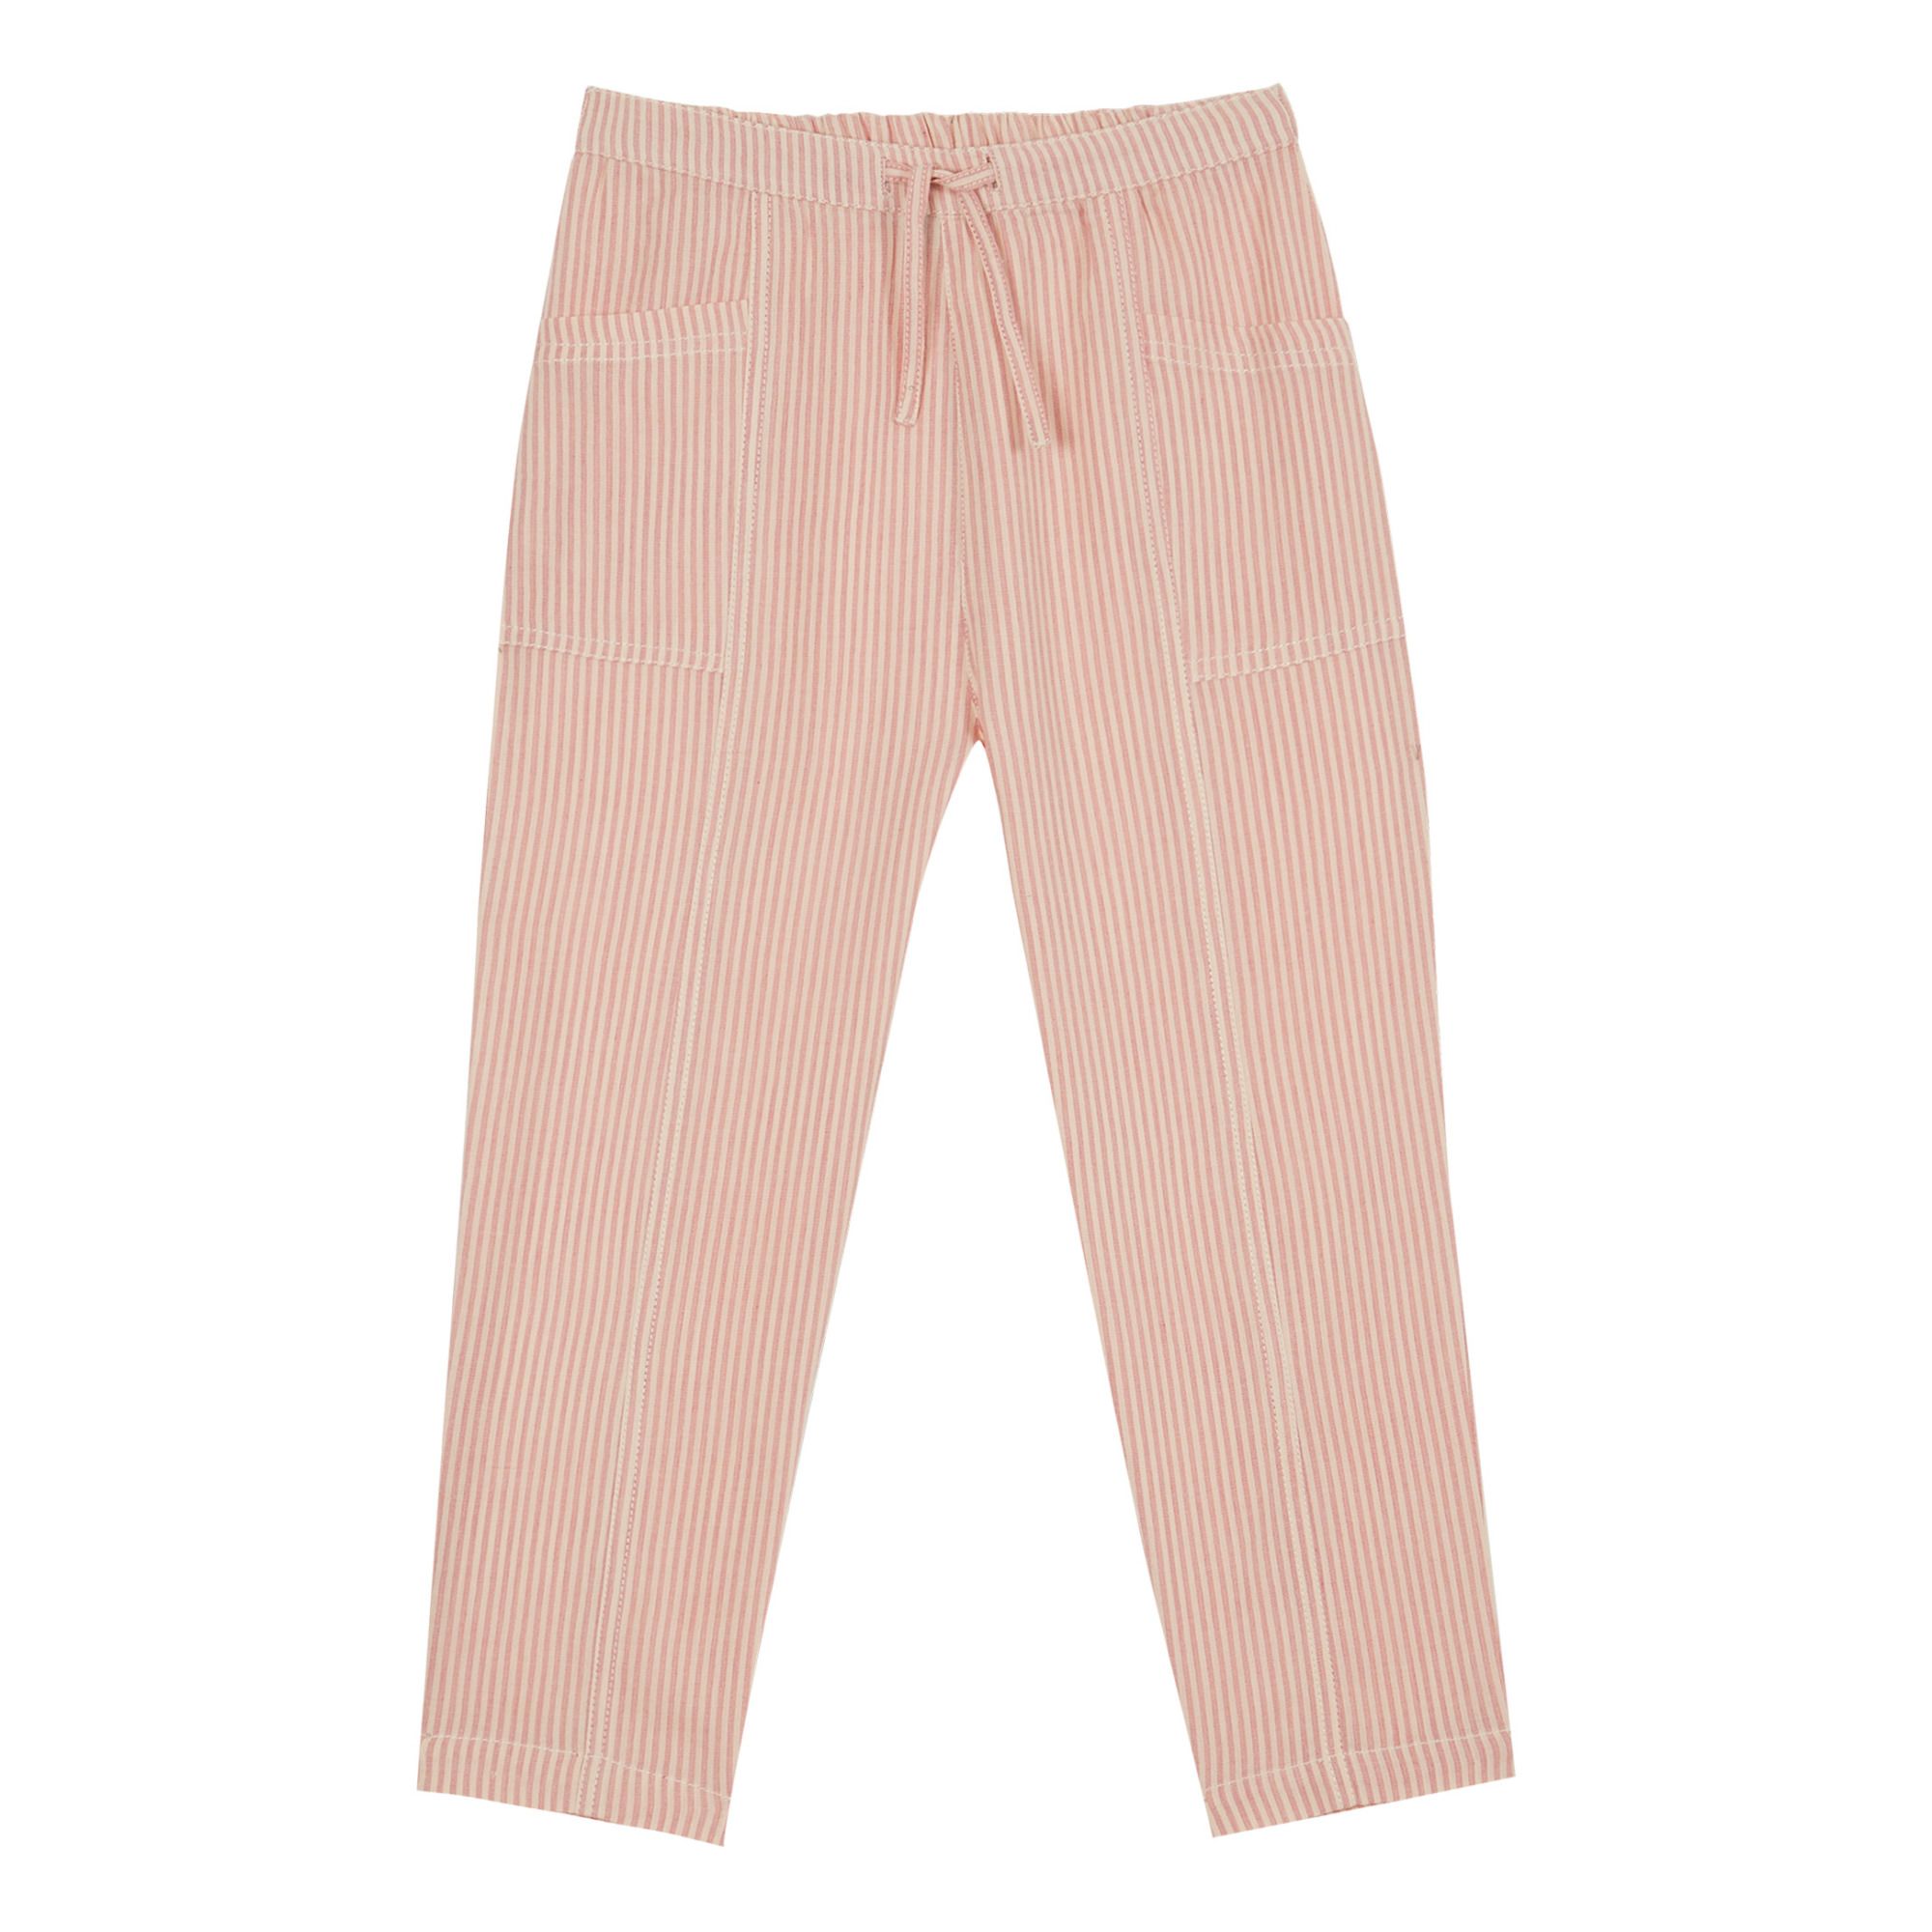 Emile et Ida - Pantalon Rayures - Pink | Smallable